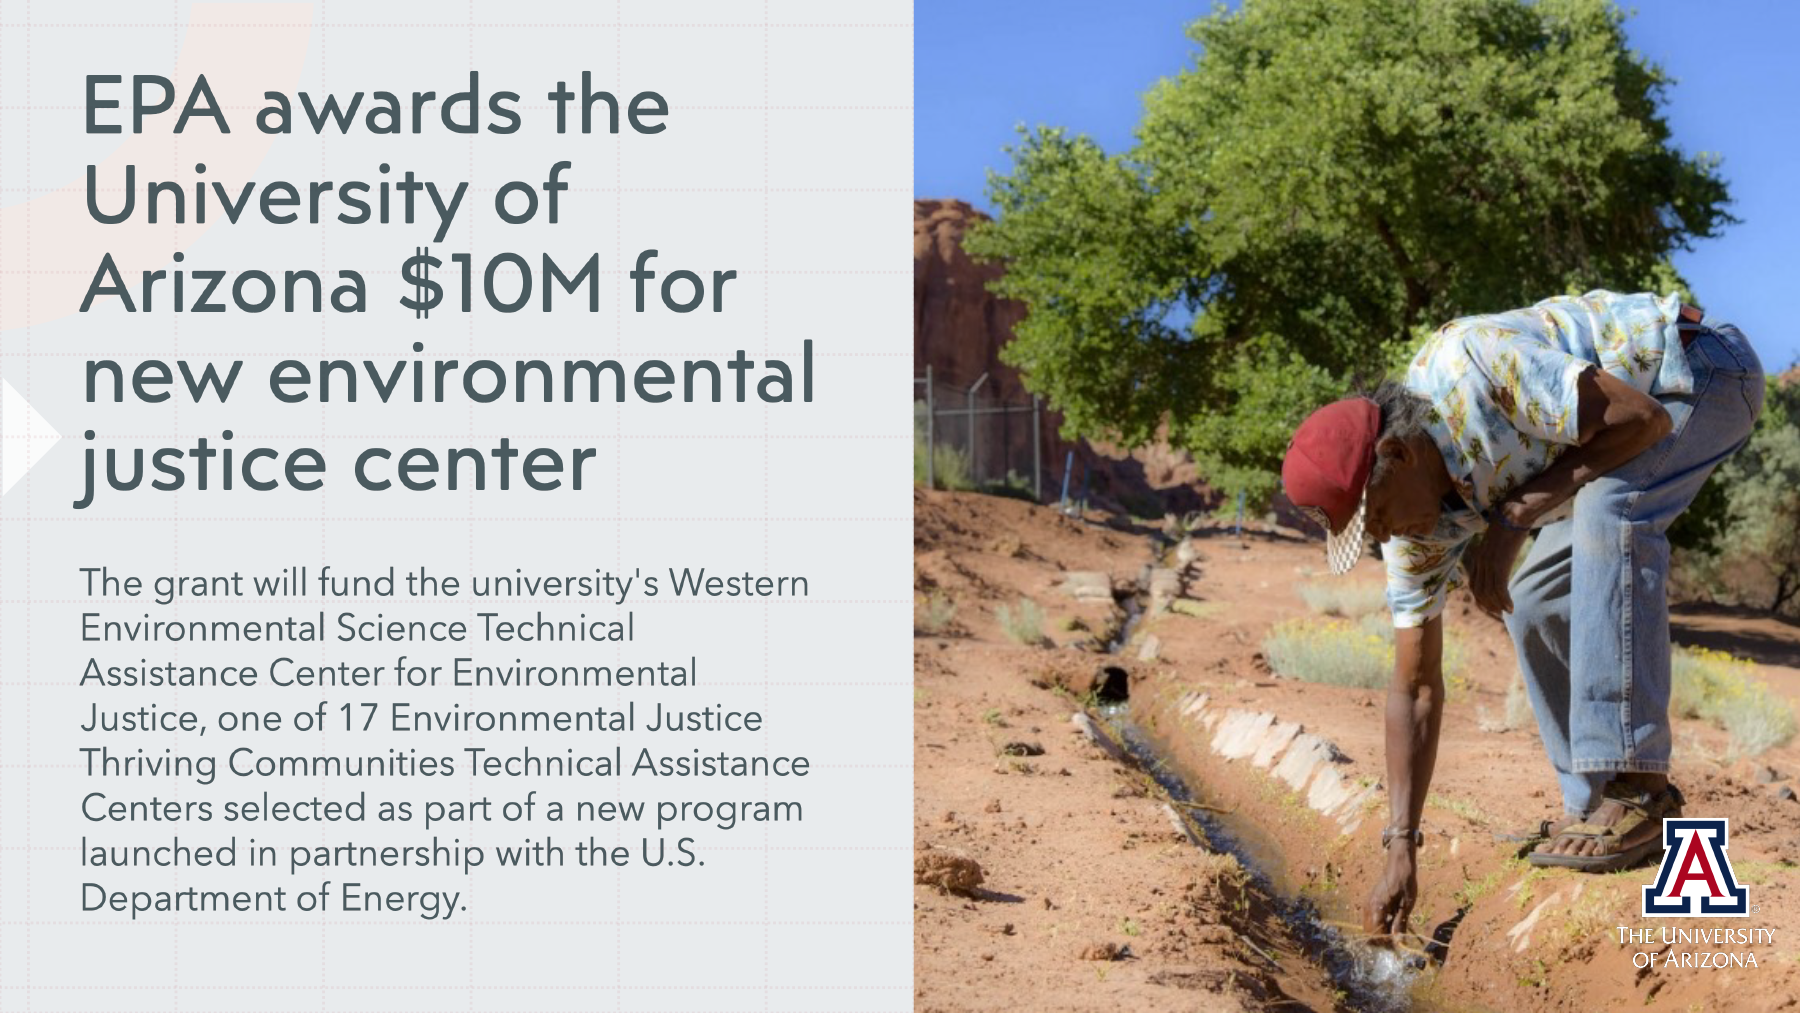 EPA awards the University of Arizona $10M for new environmental justice center